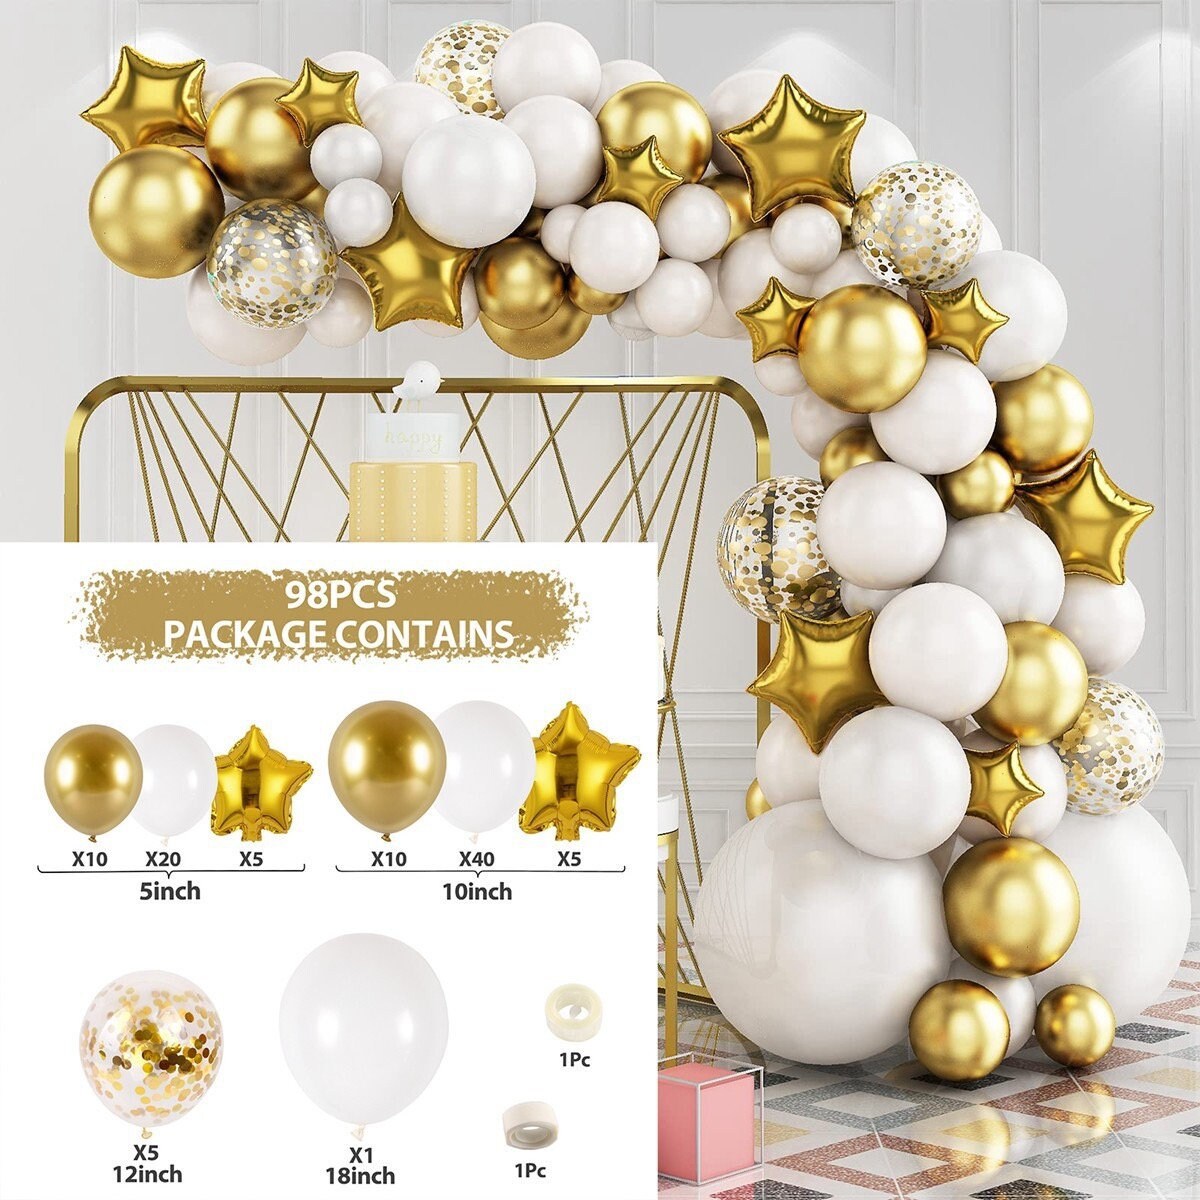 98pcs Whit Gold Balloon Arch Kit | Metallic Gold Star Confetti Balloon Garland for Baby Shower Birthday Party Wedding Anniversary New Year